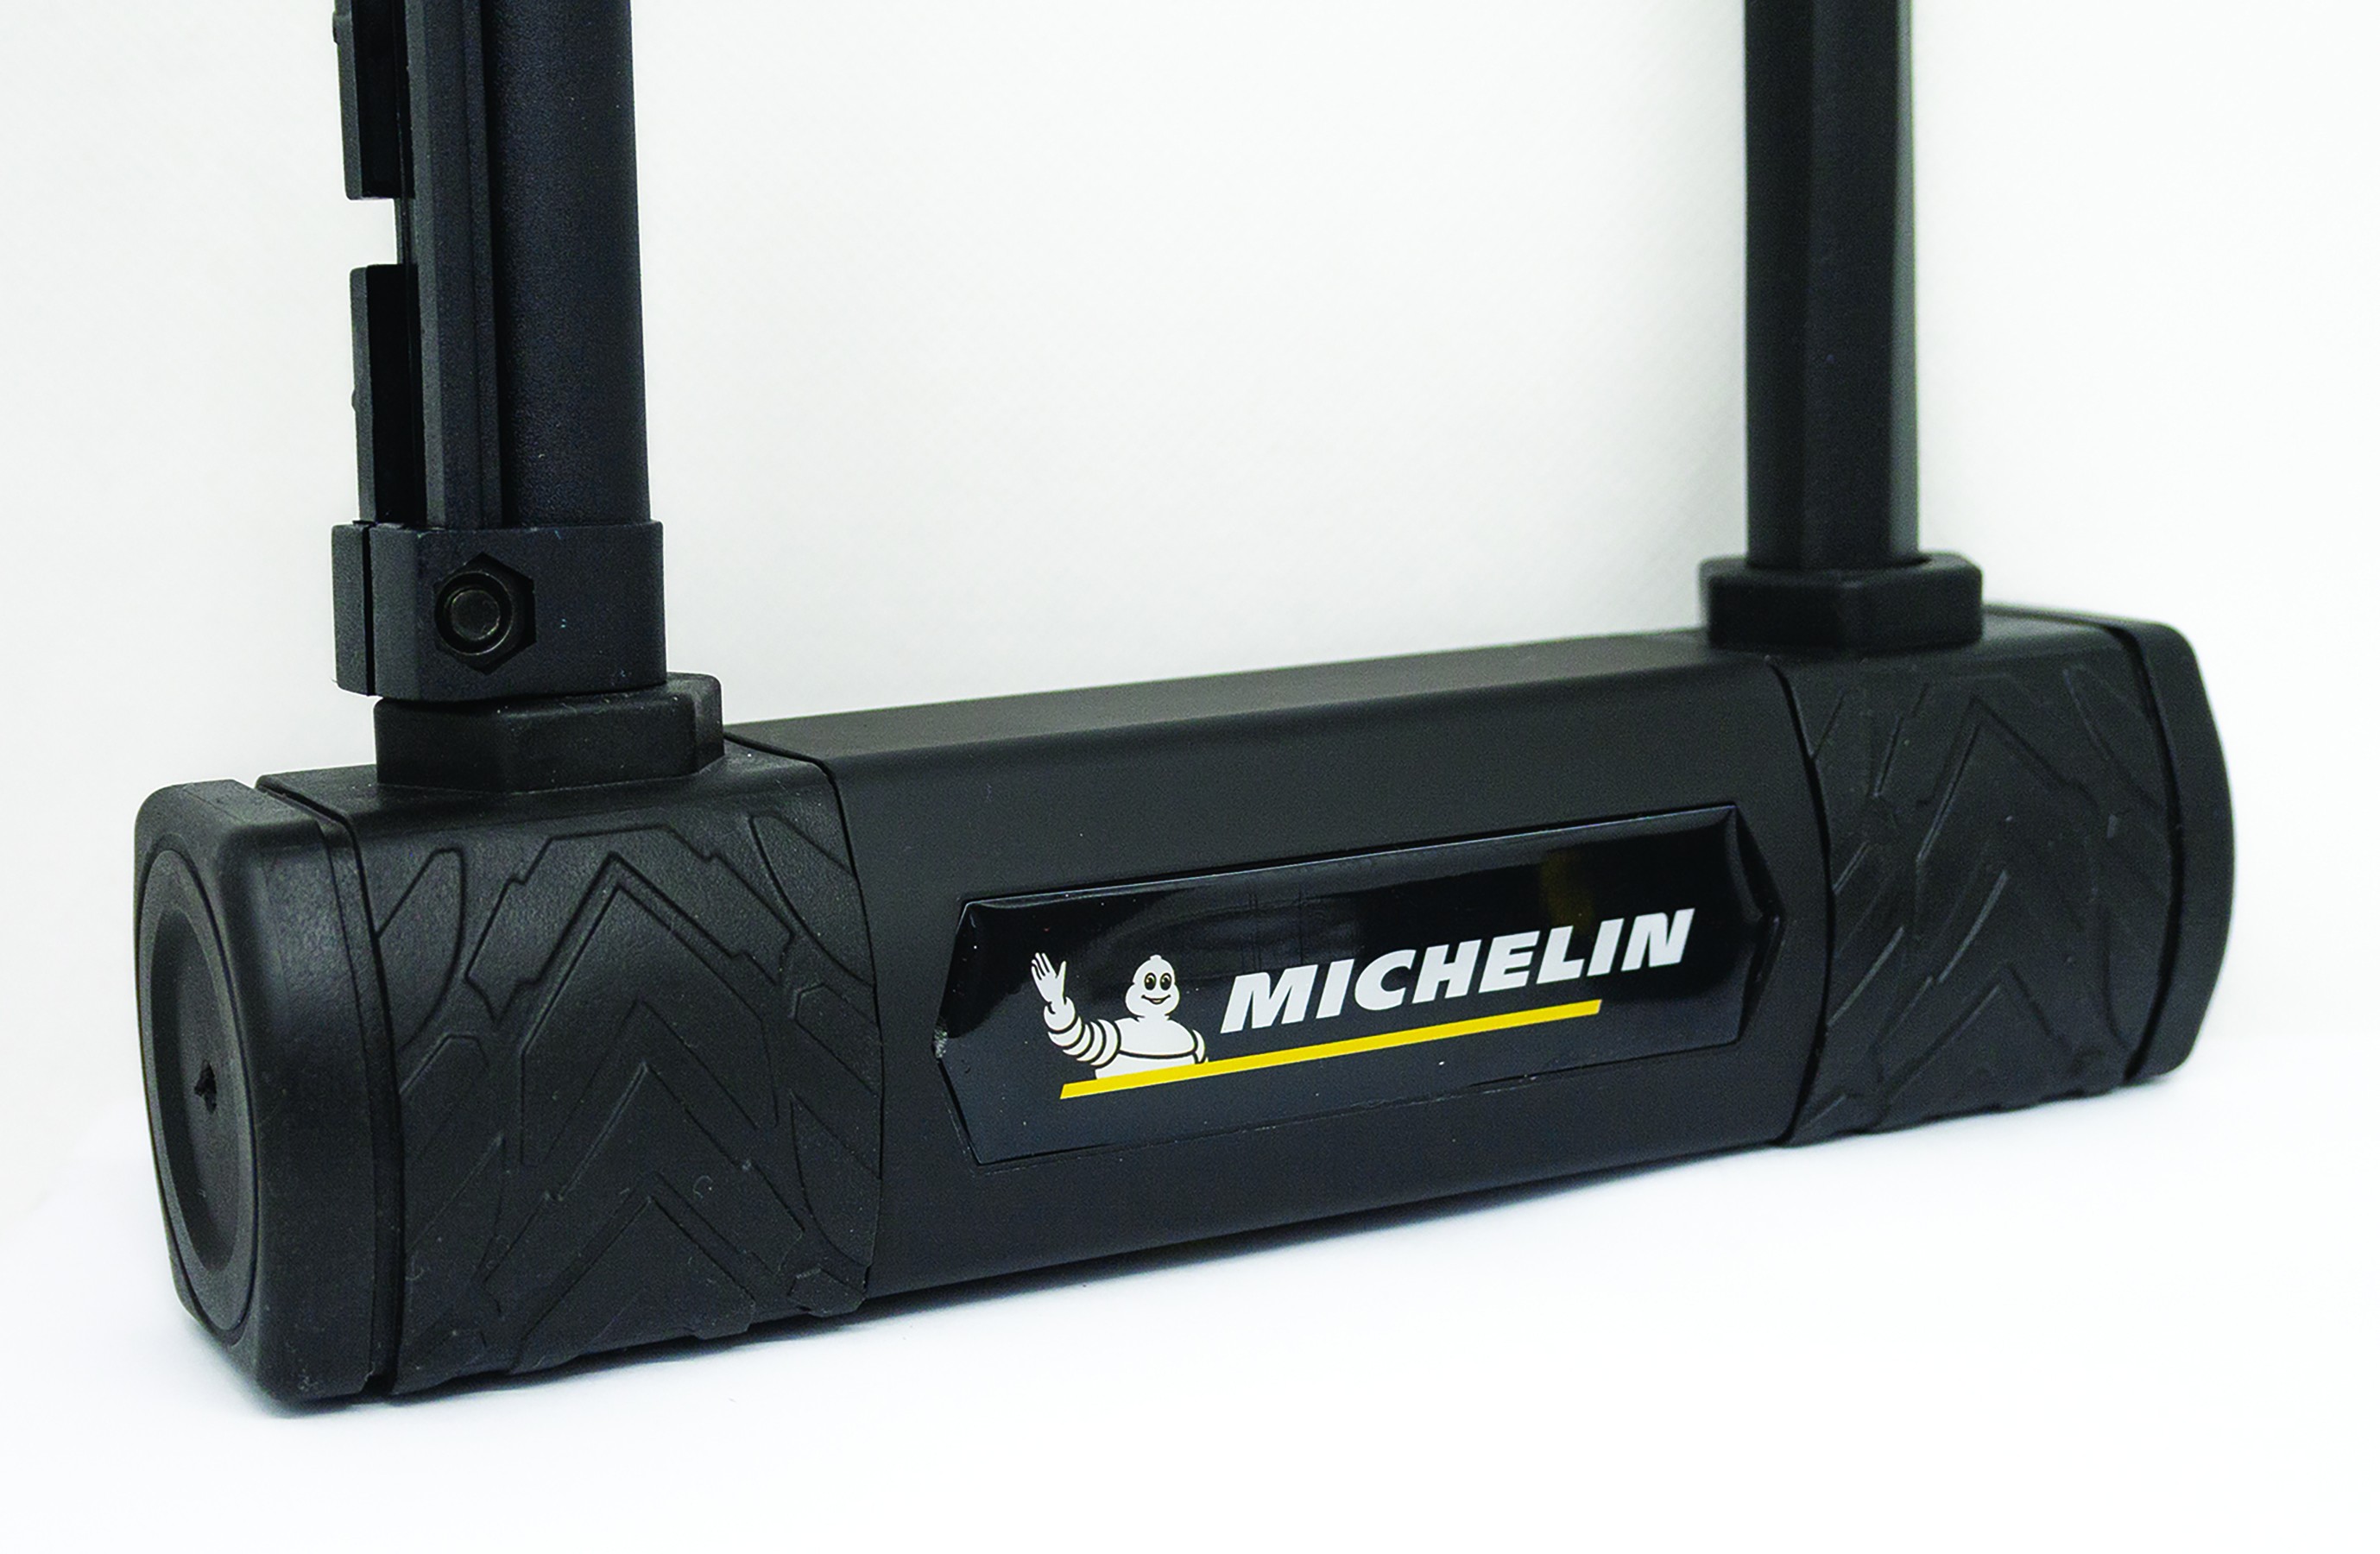 Michelin ANTIVOL VELO U 105 x 245mm NOIR AVEC SUPPORT FIXATION AU CADRE